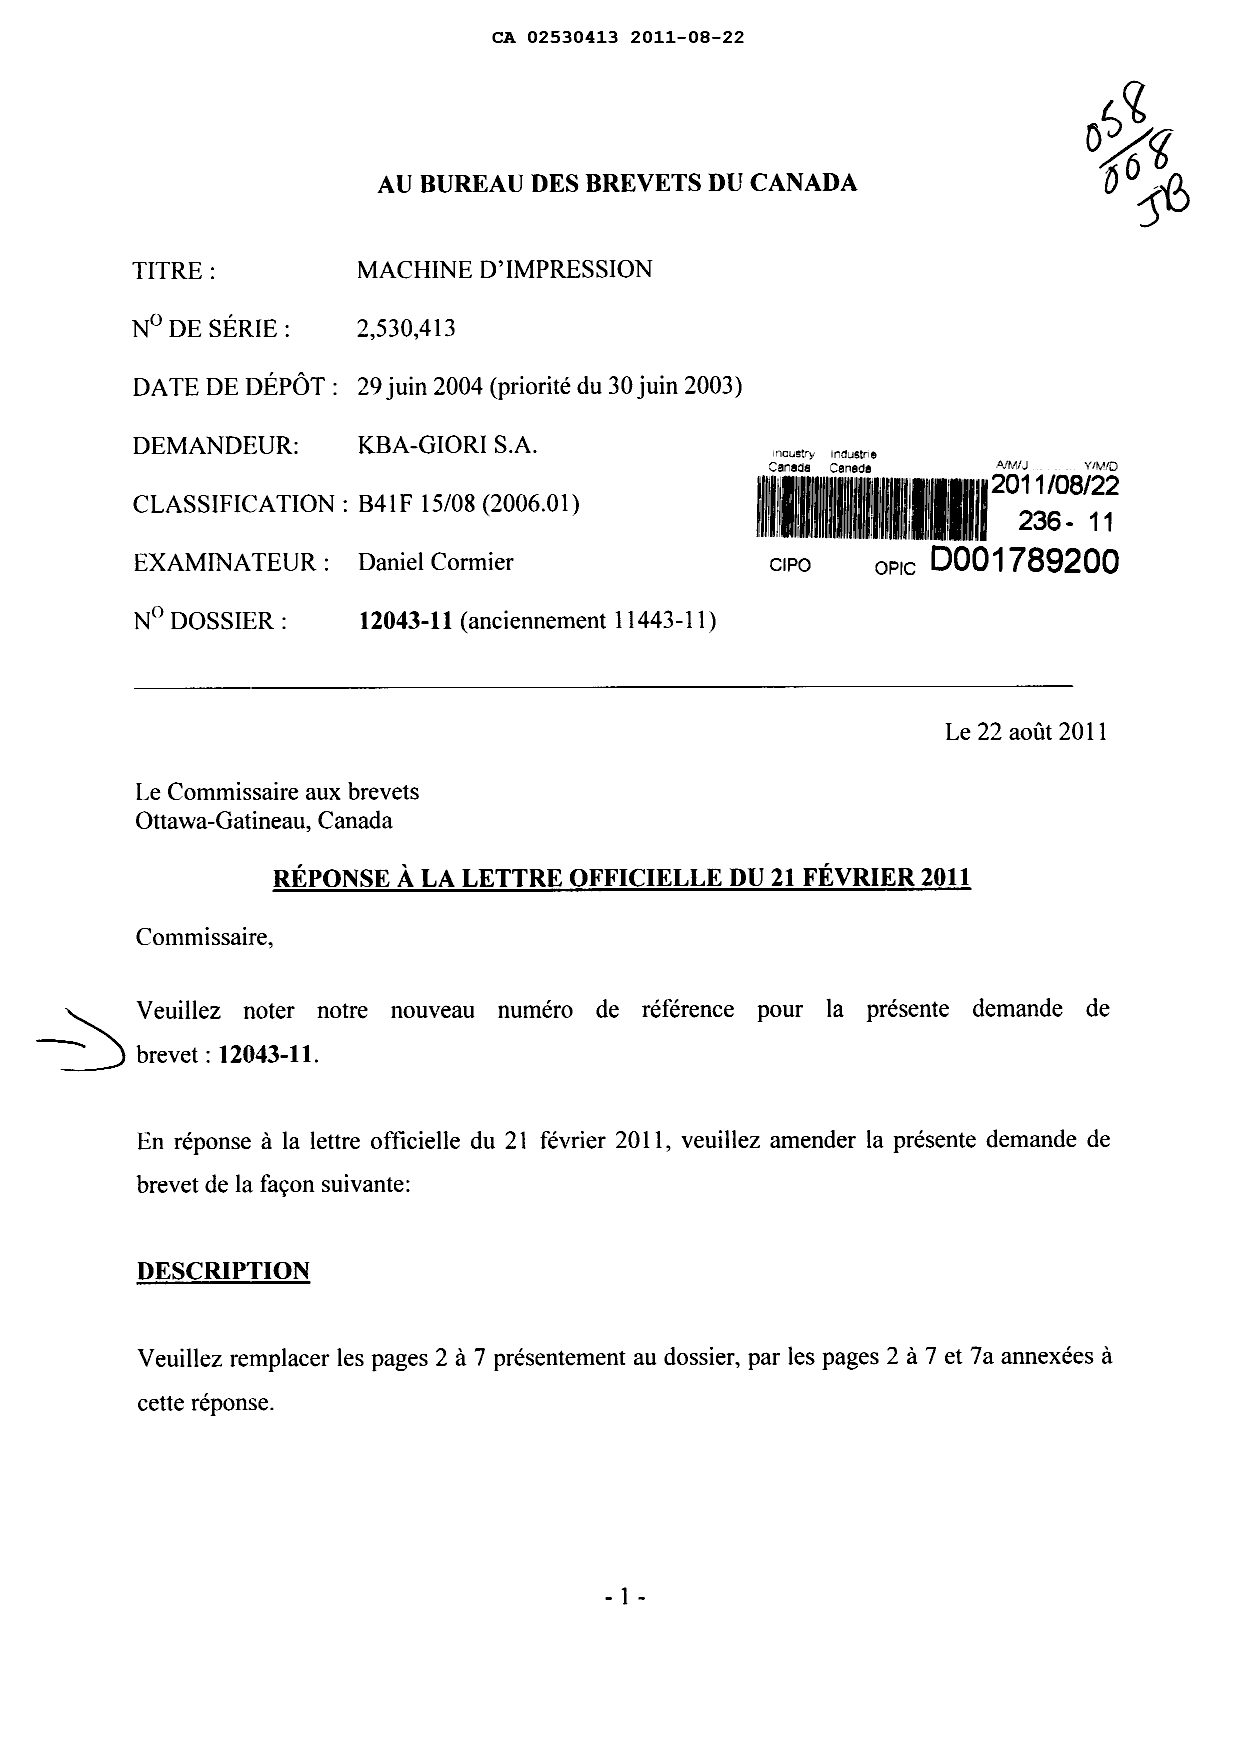 Canadian Patent Document 2530413. Correspondence 20110822. Image 1 of 4